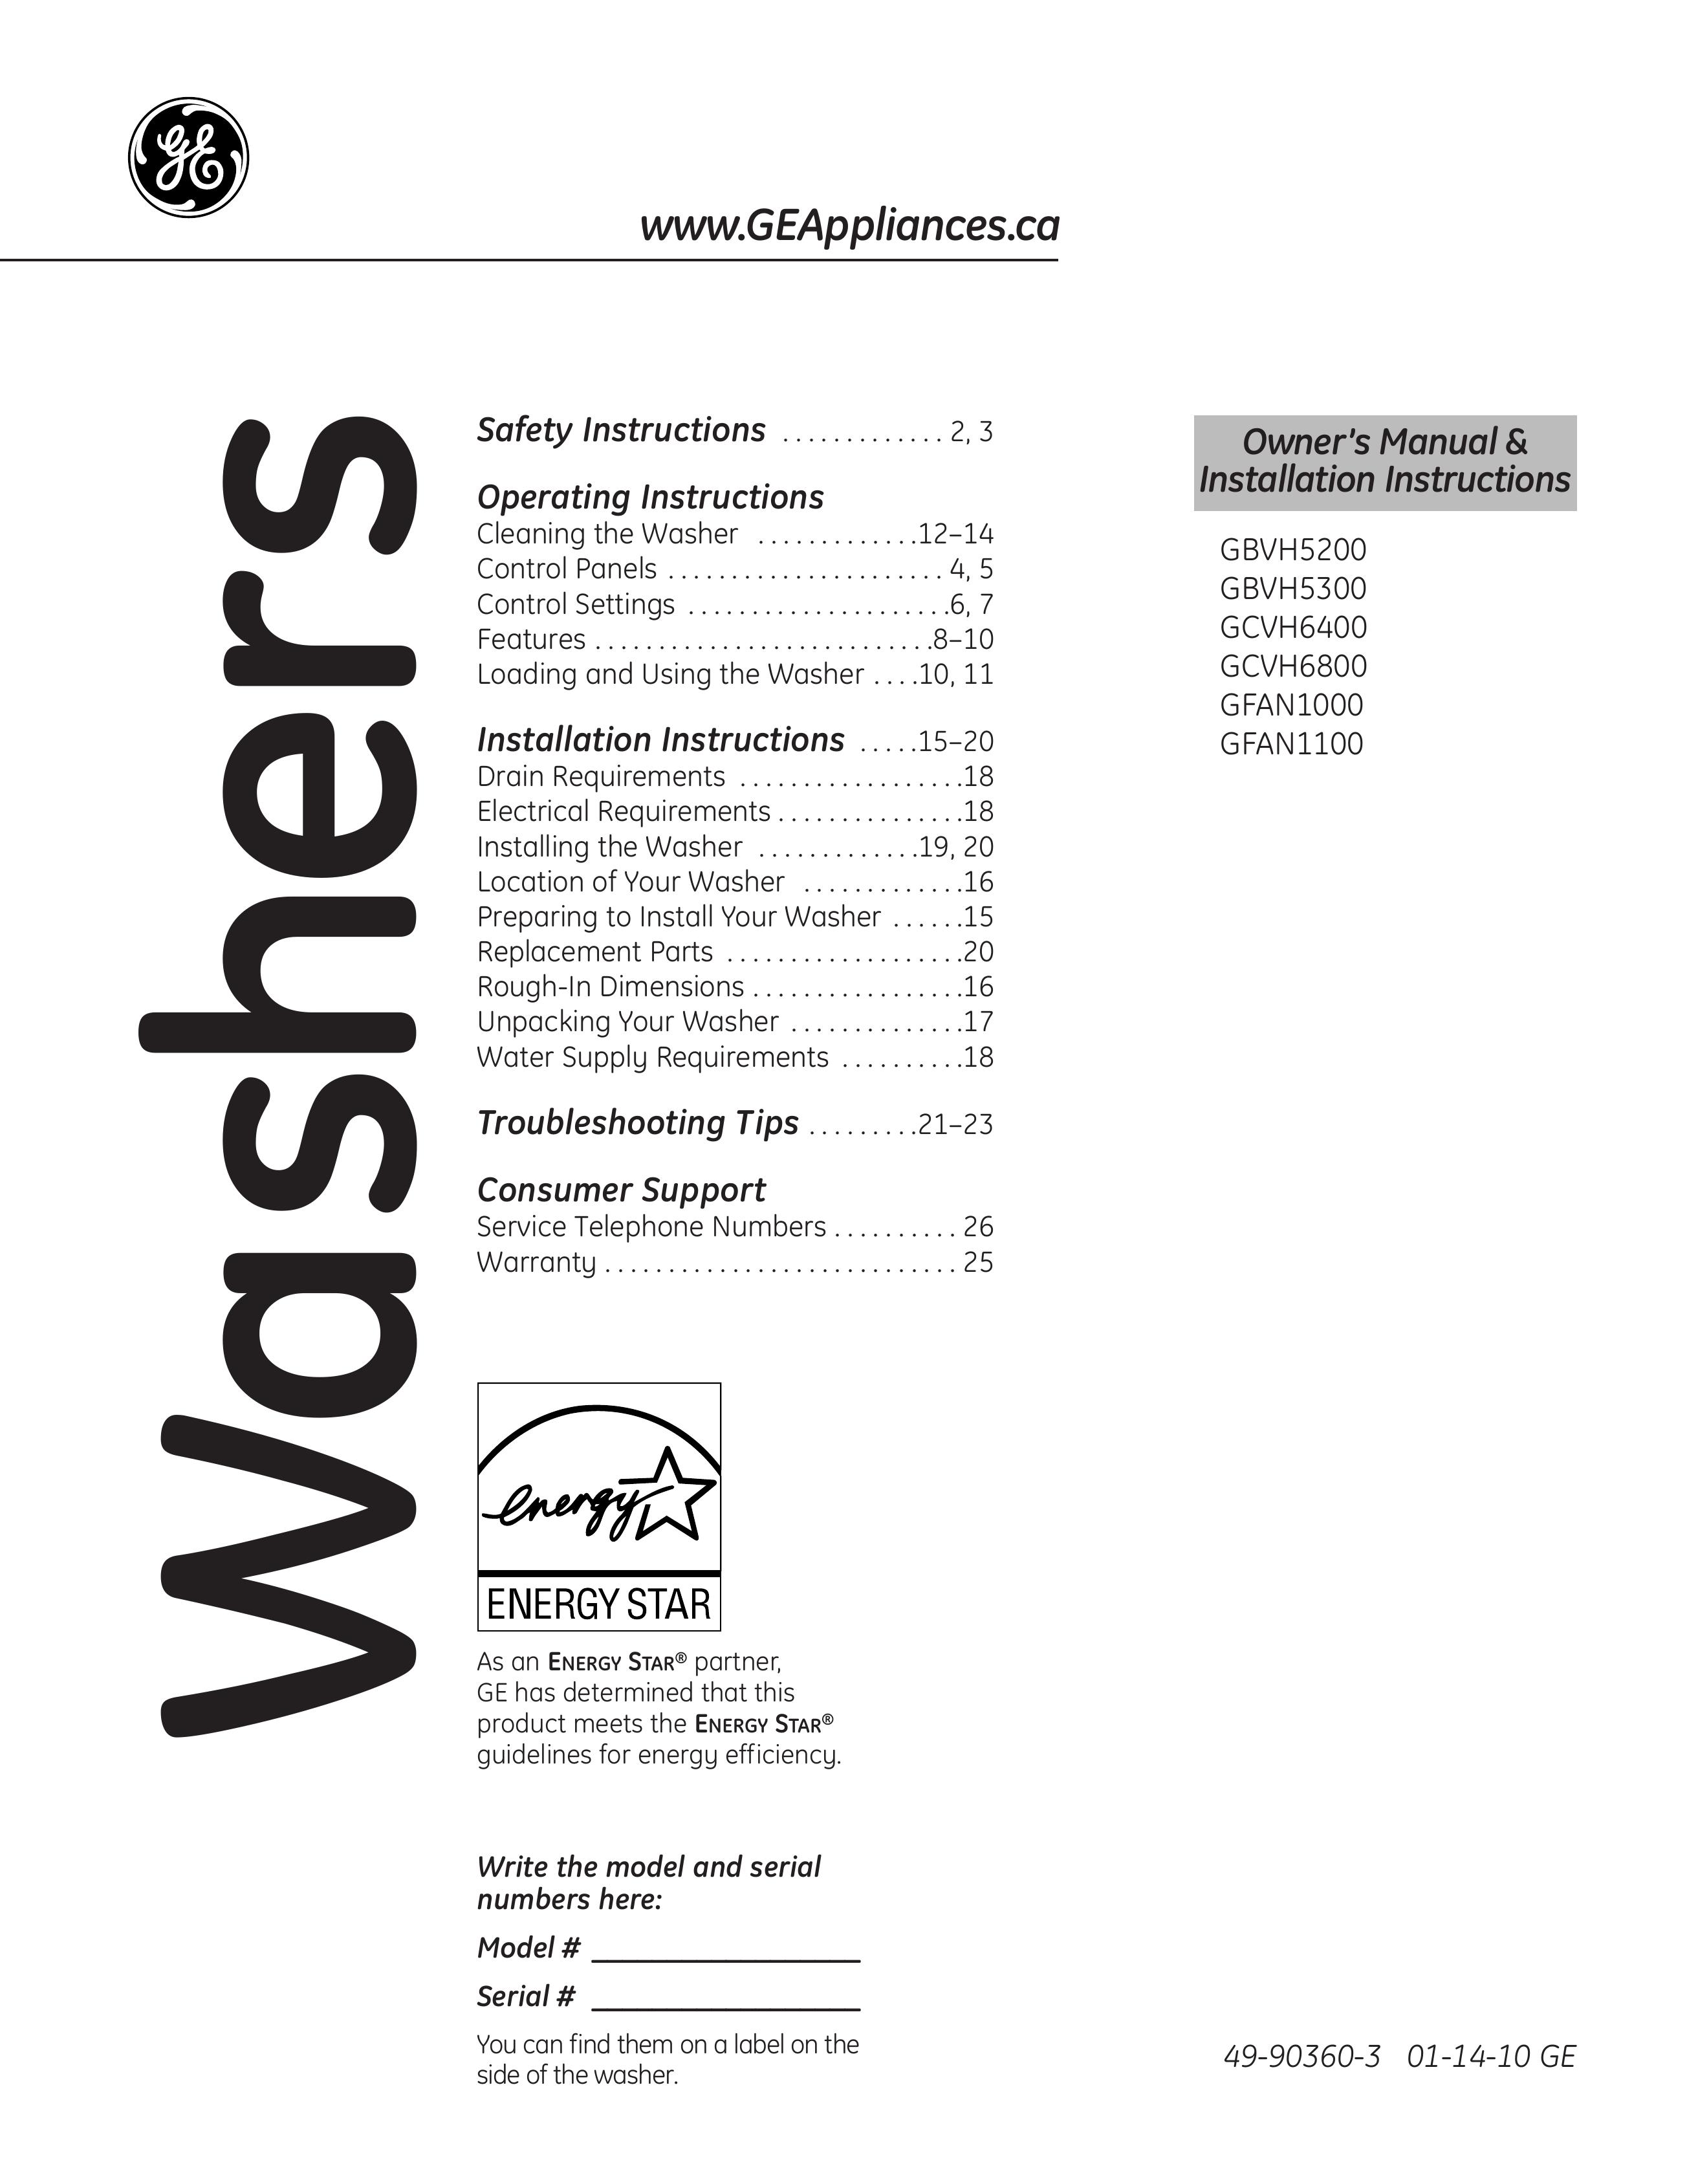 GE GFAN1100 Washer User Manual